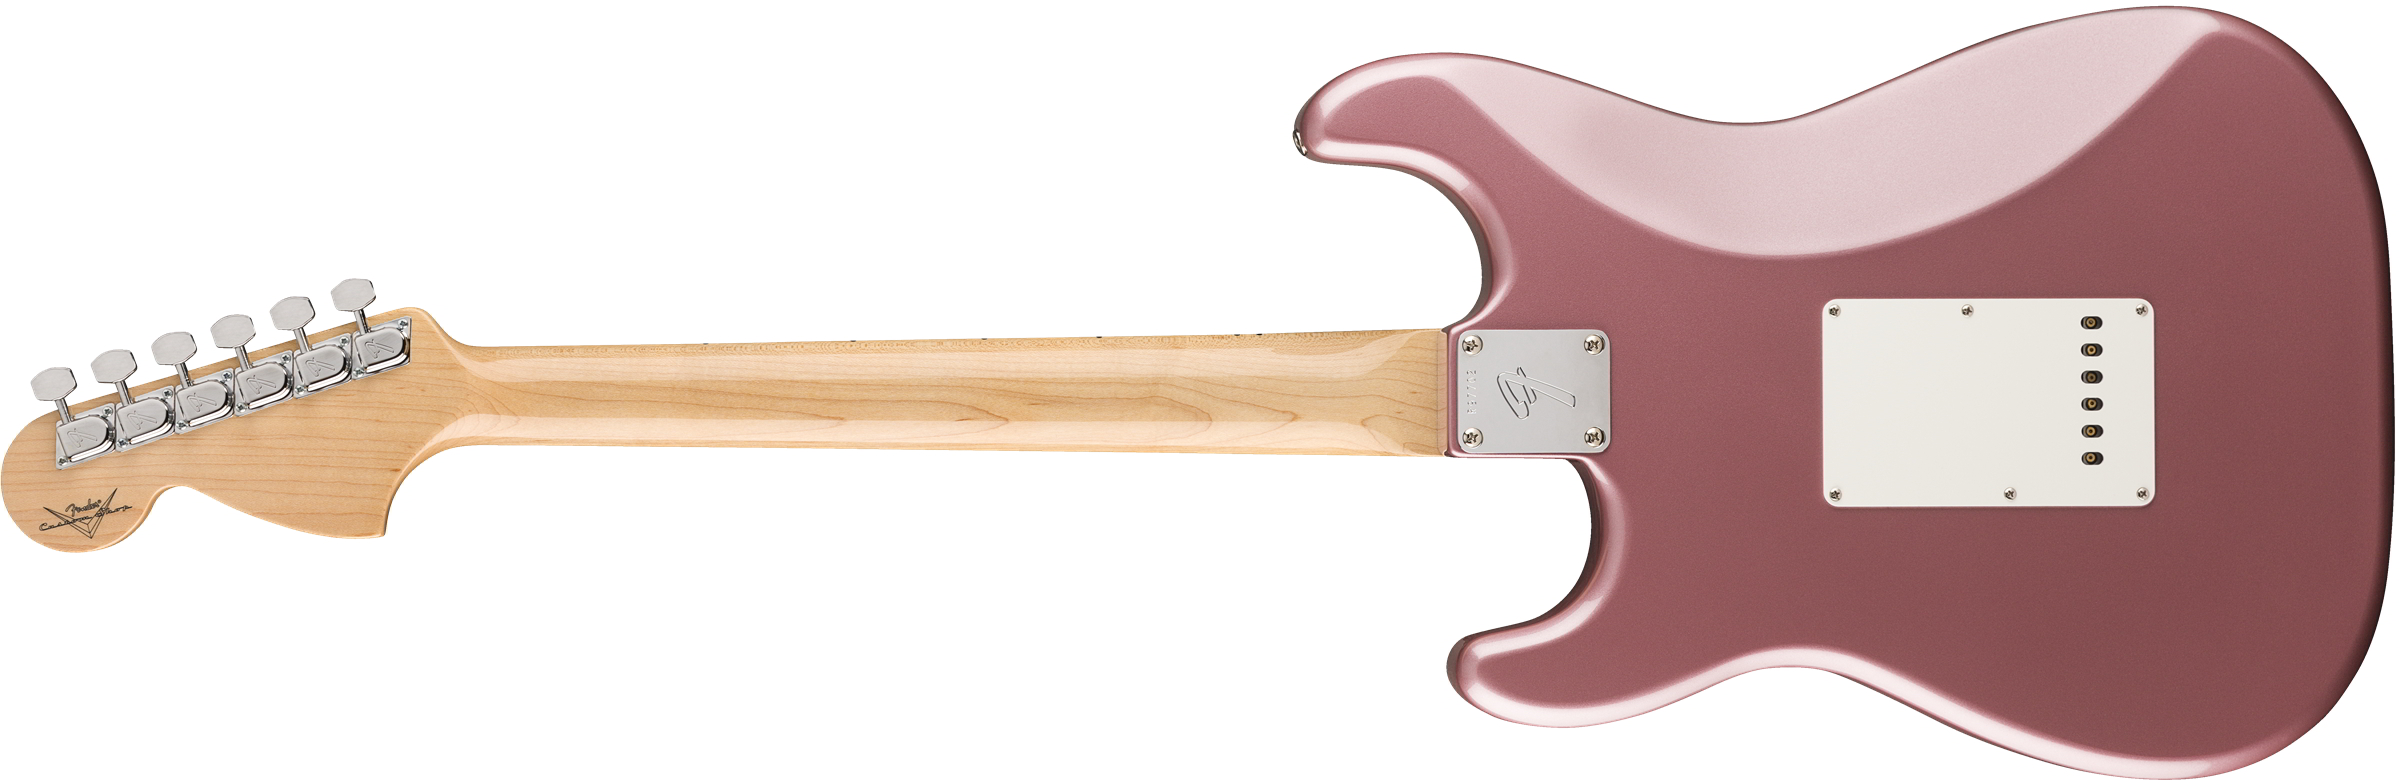 Yngwie Malmsteen Signature Stratocaster, Scalloped Maple Fingerboard, Burgundy Mist Metallic背面画像